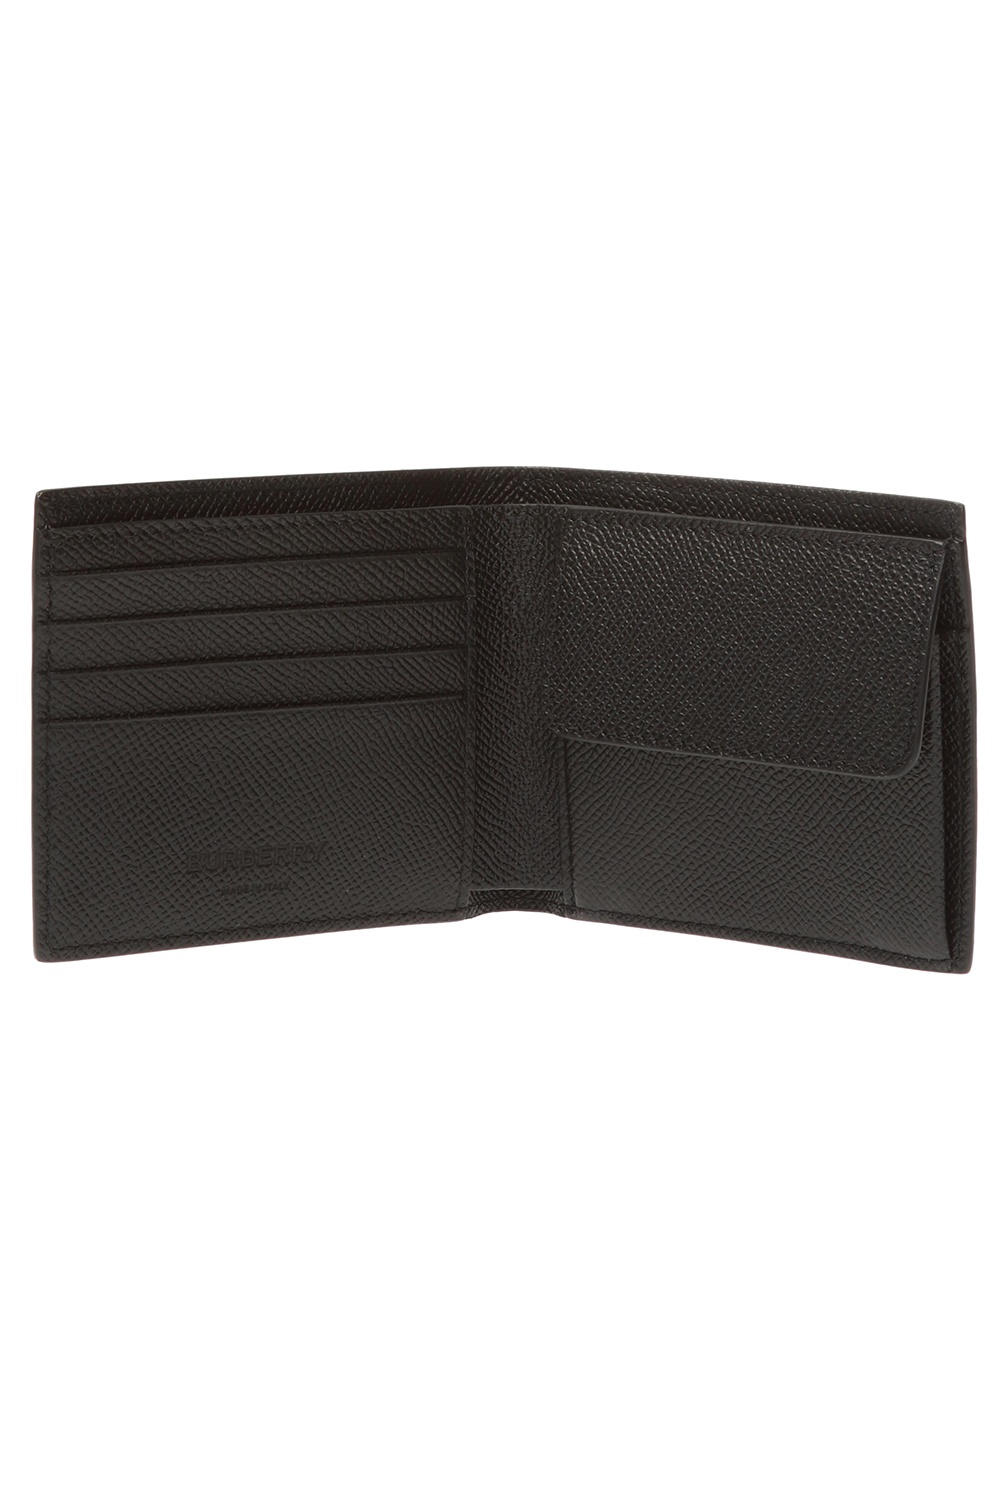 IetpShops Brazil - Folding wallet with logo Burberry - Burberry Cresswell  Big Pocket Internal Check